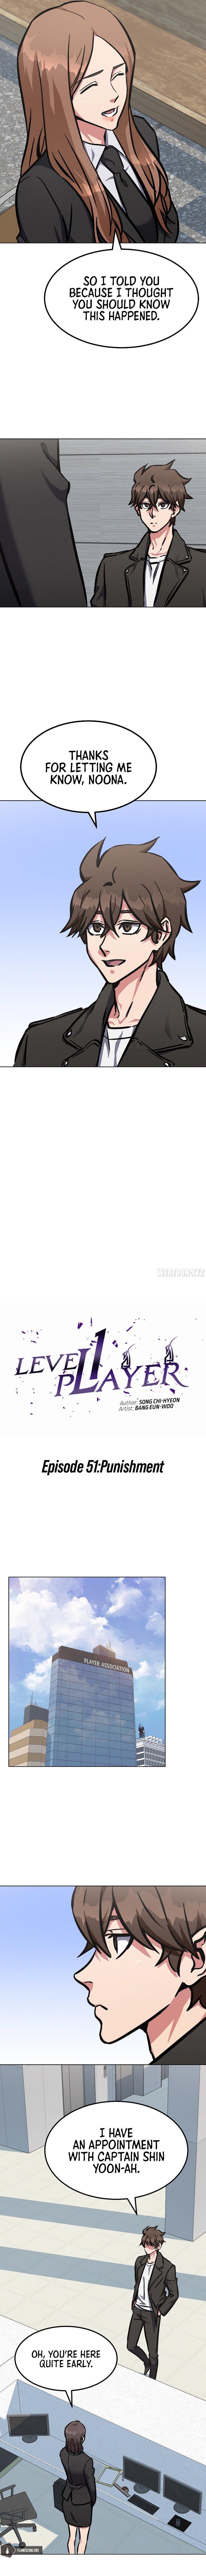 level-1-player-chap-51-4